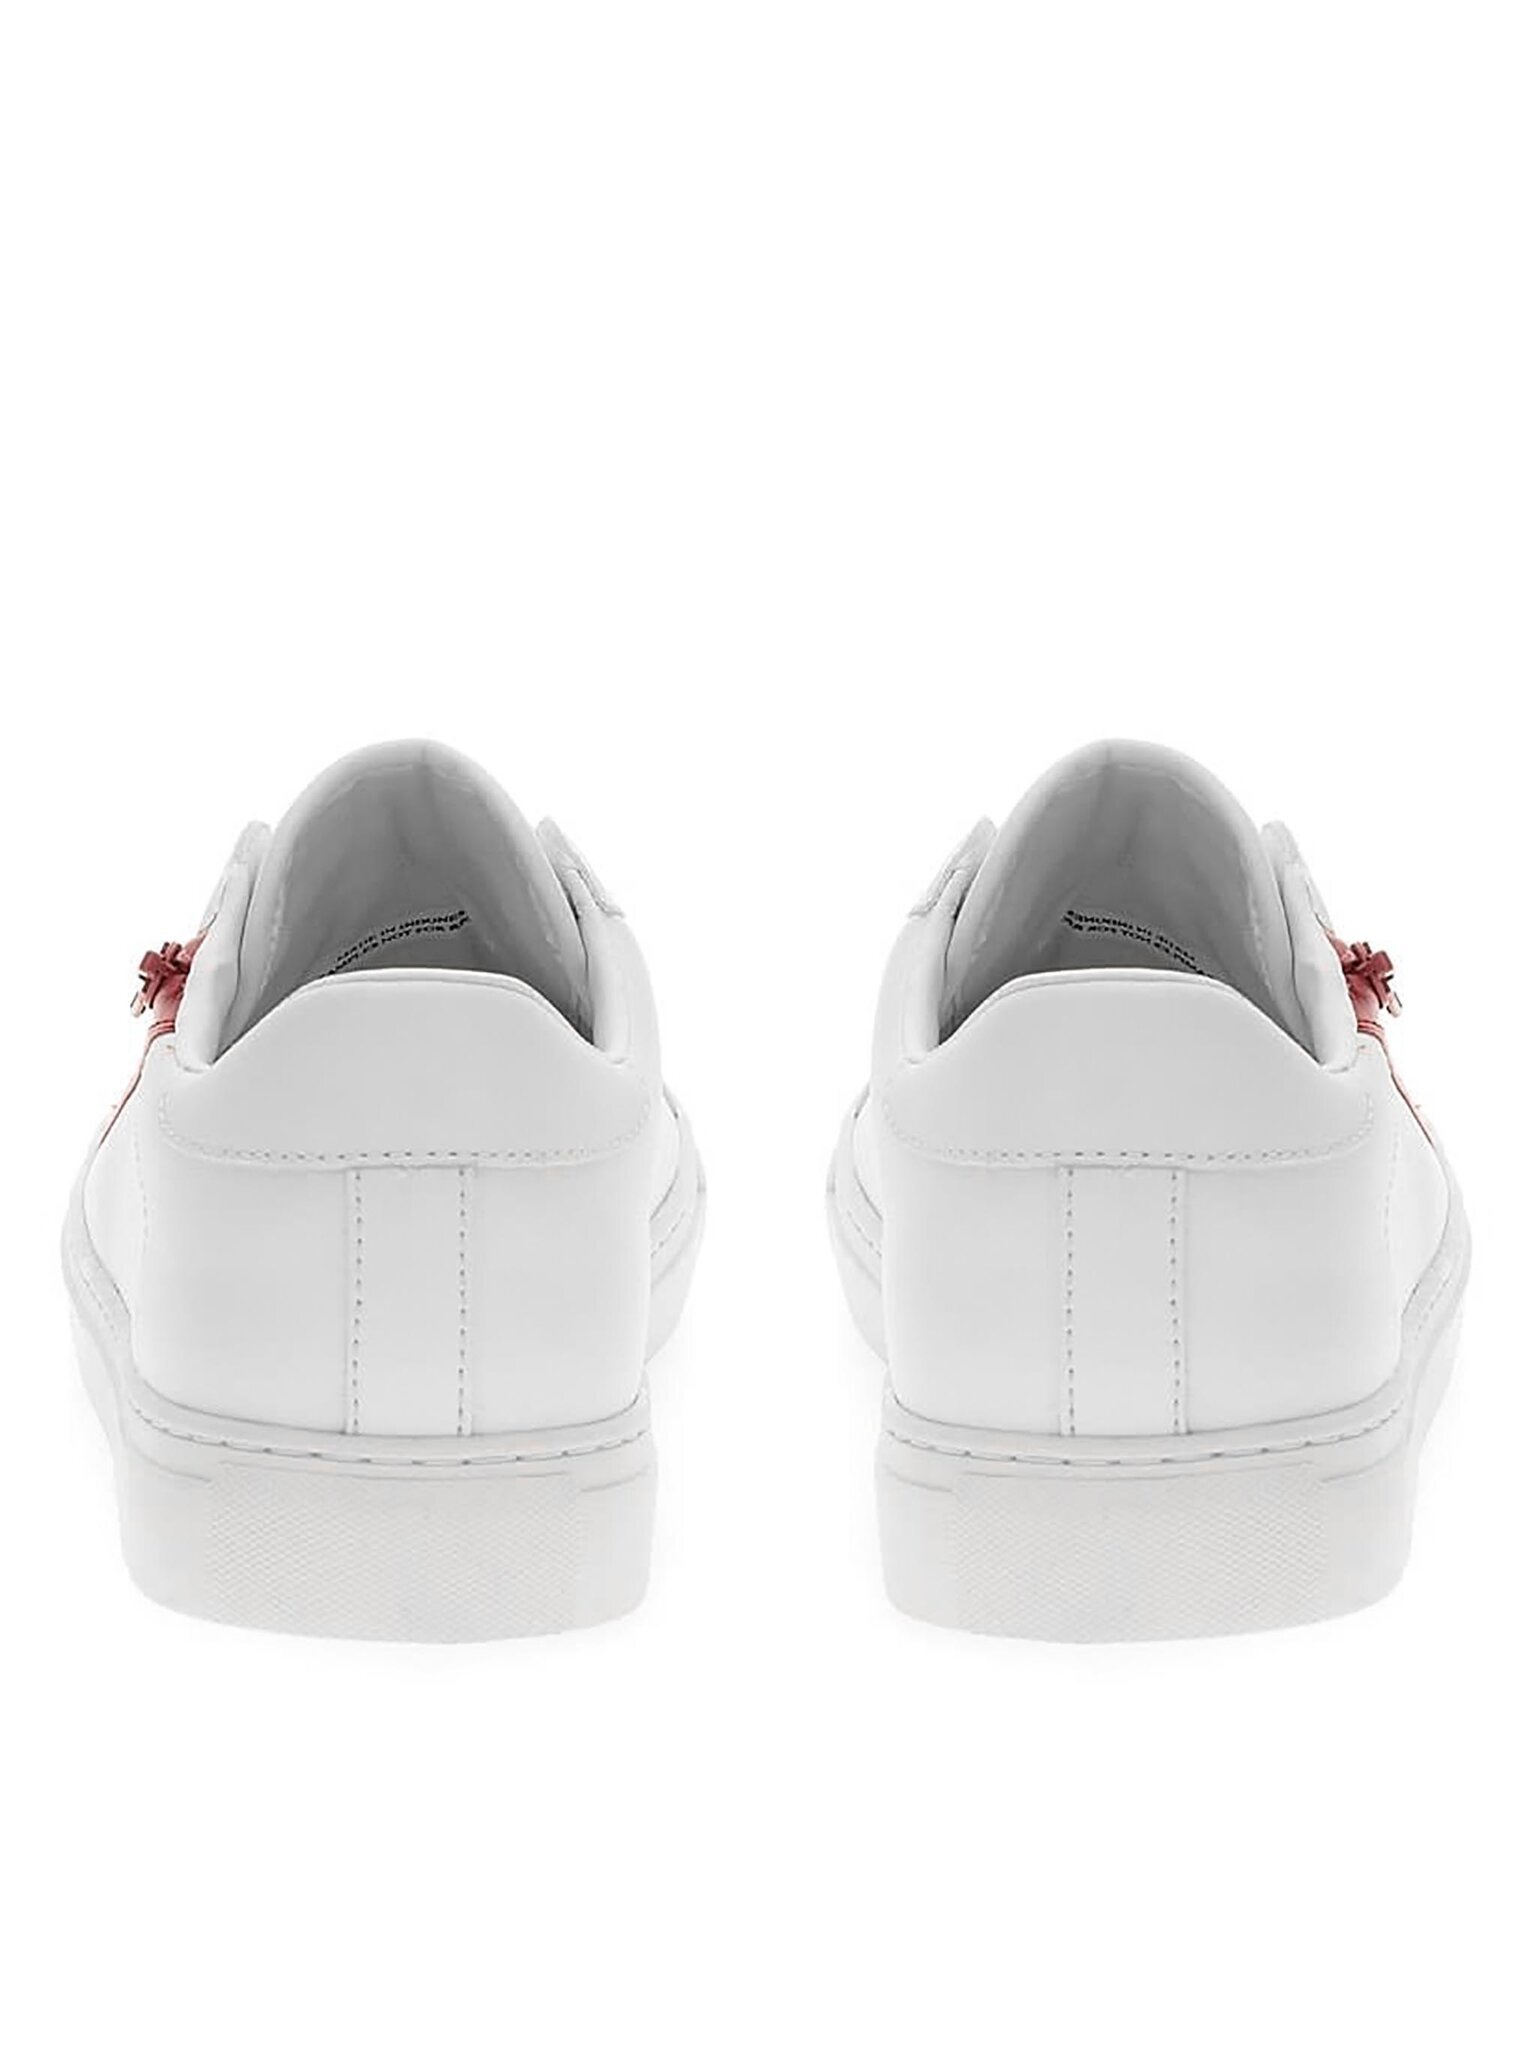 Sneakers / Sport  Guess jeans FM7TIK ELE12 WHITE RED